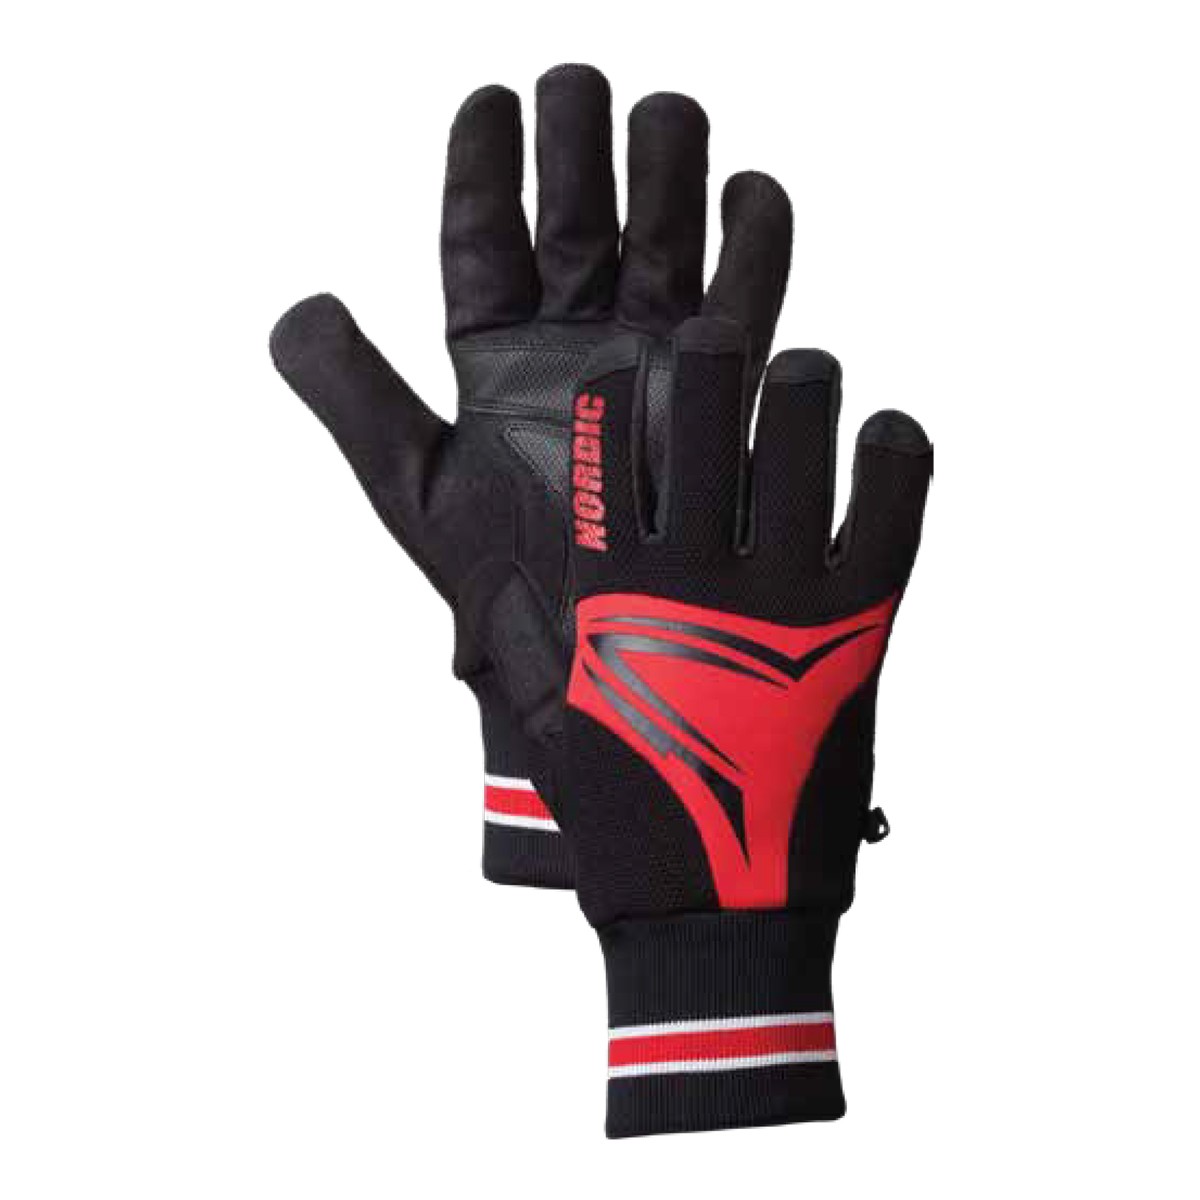 Cross-Country XC/Nordic Gloves Manufacturer in Pakistan - Garmor